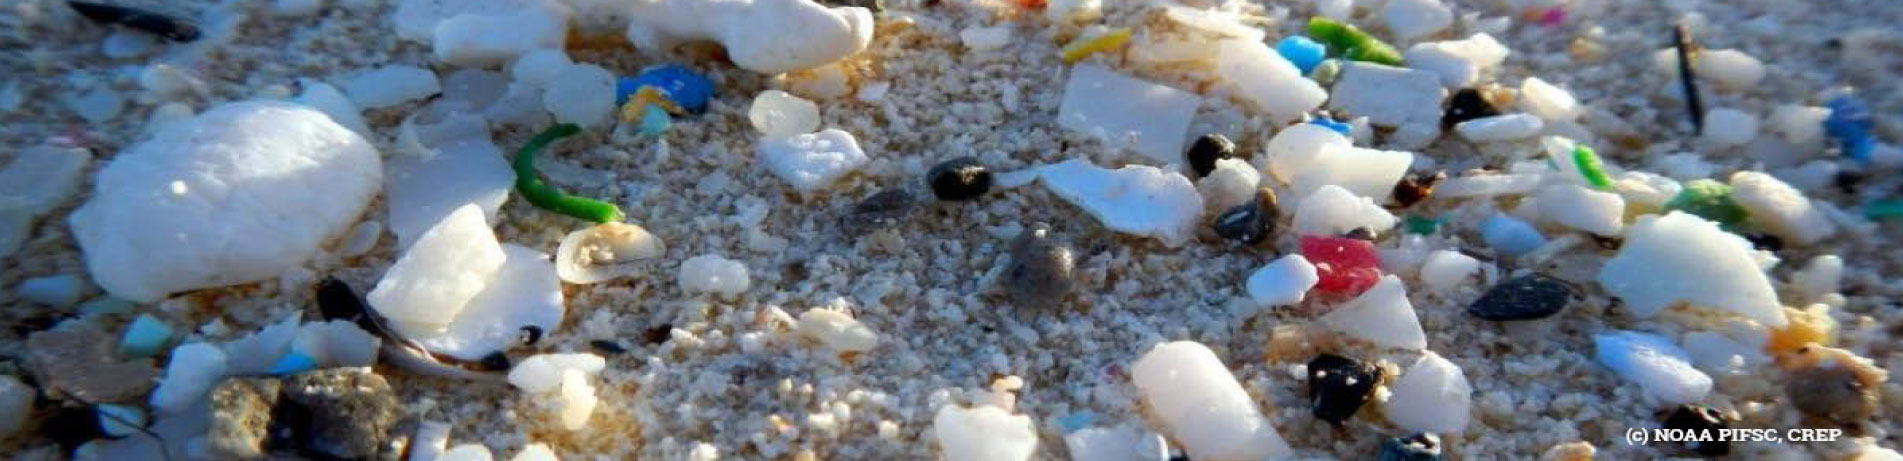 Microplastic litter on a beach